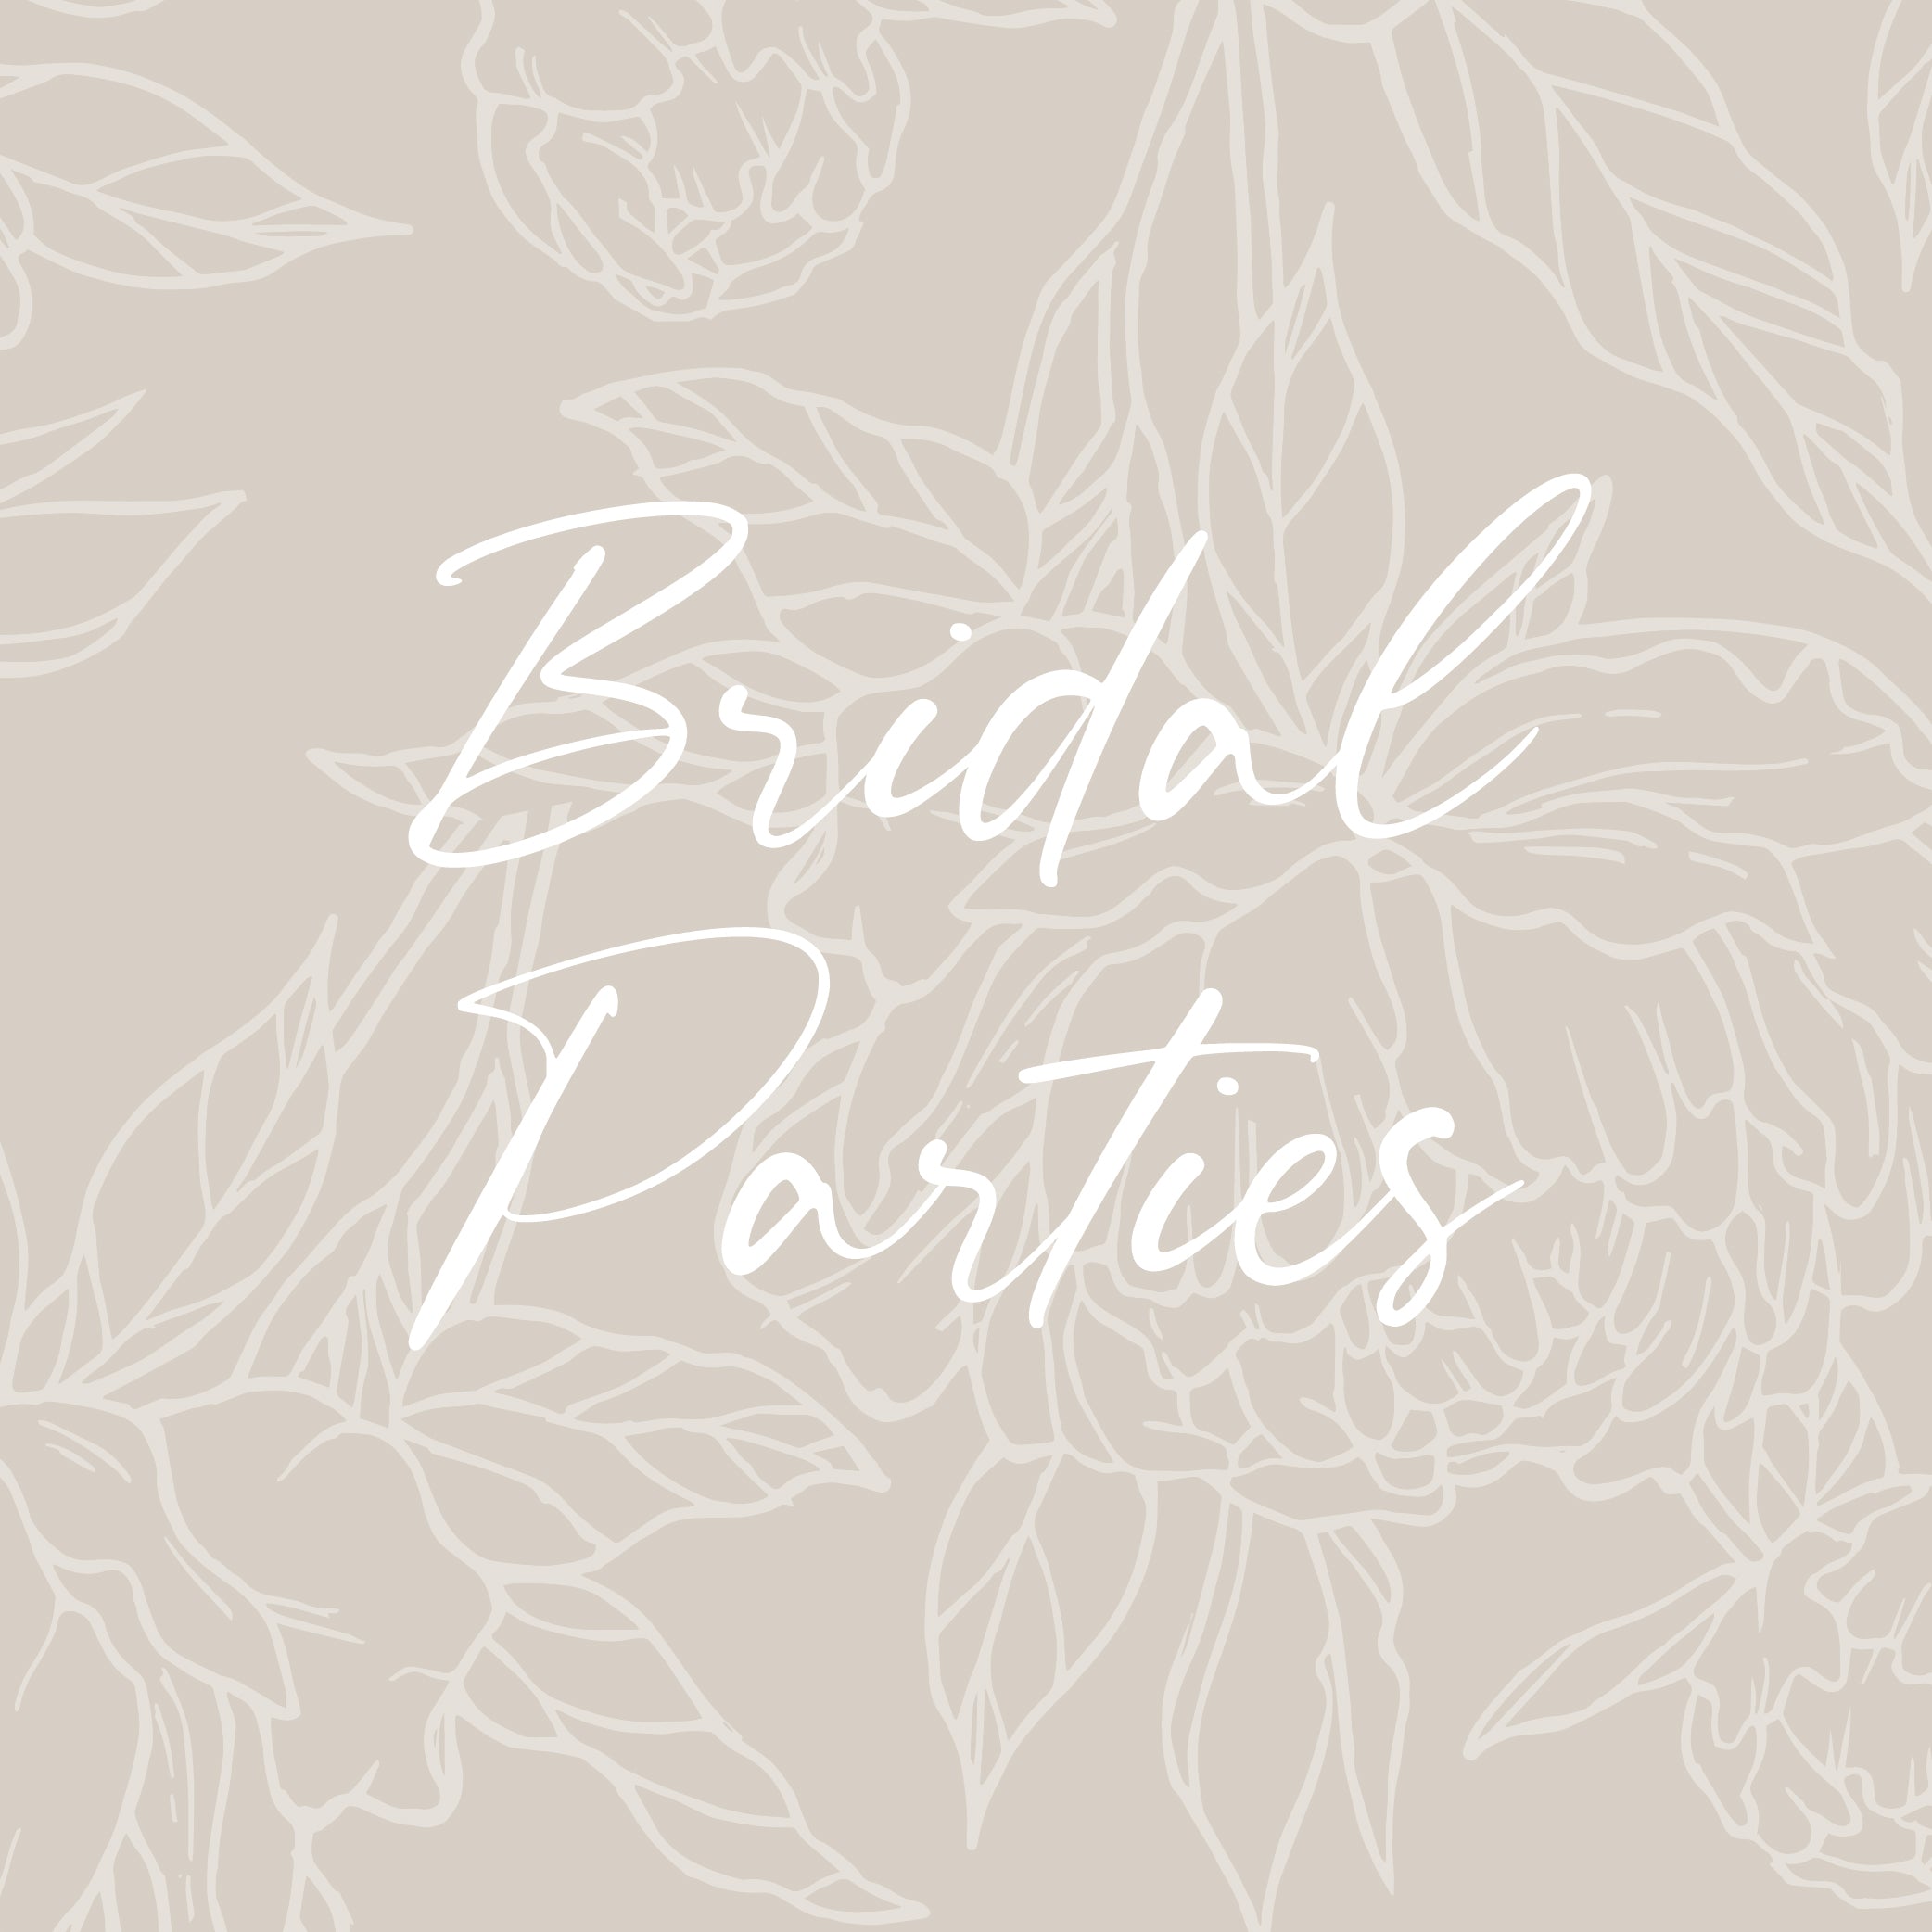 Bridal Parties